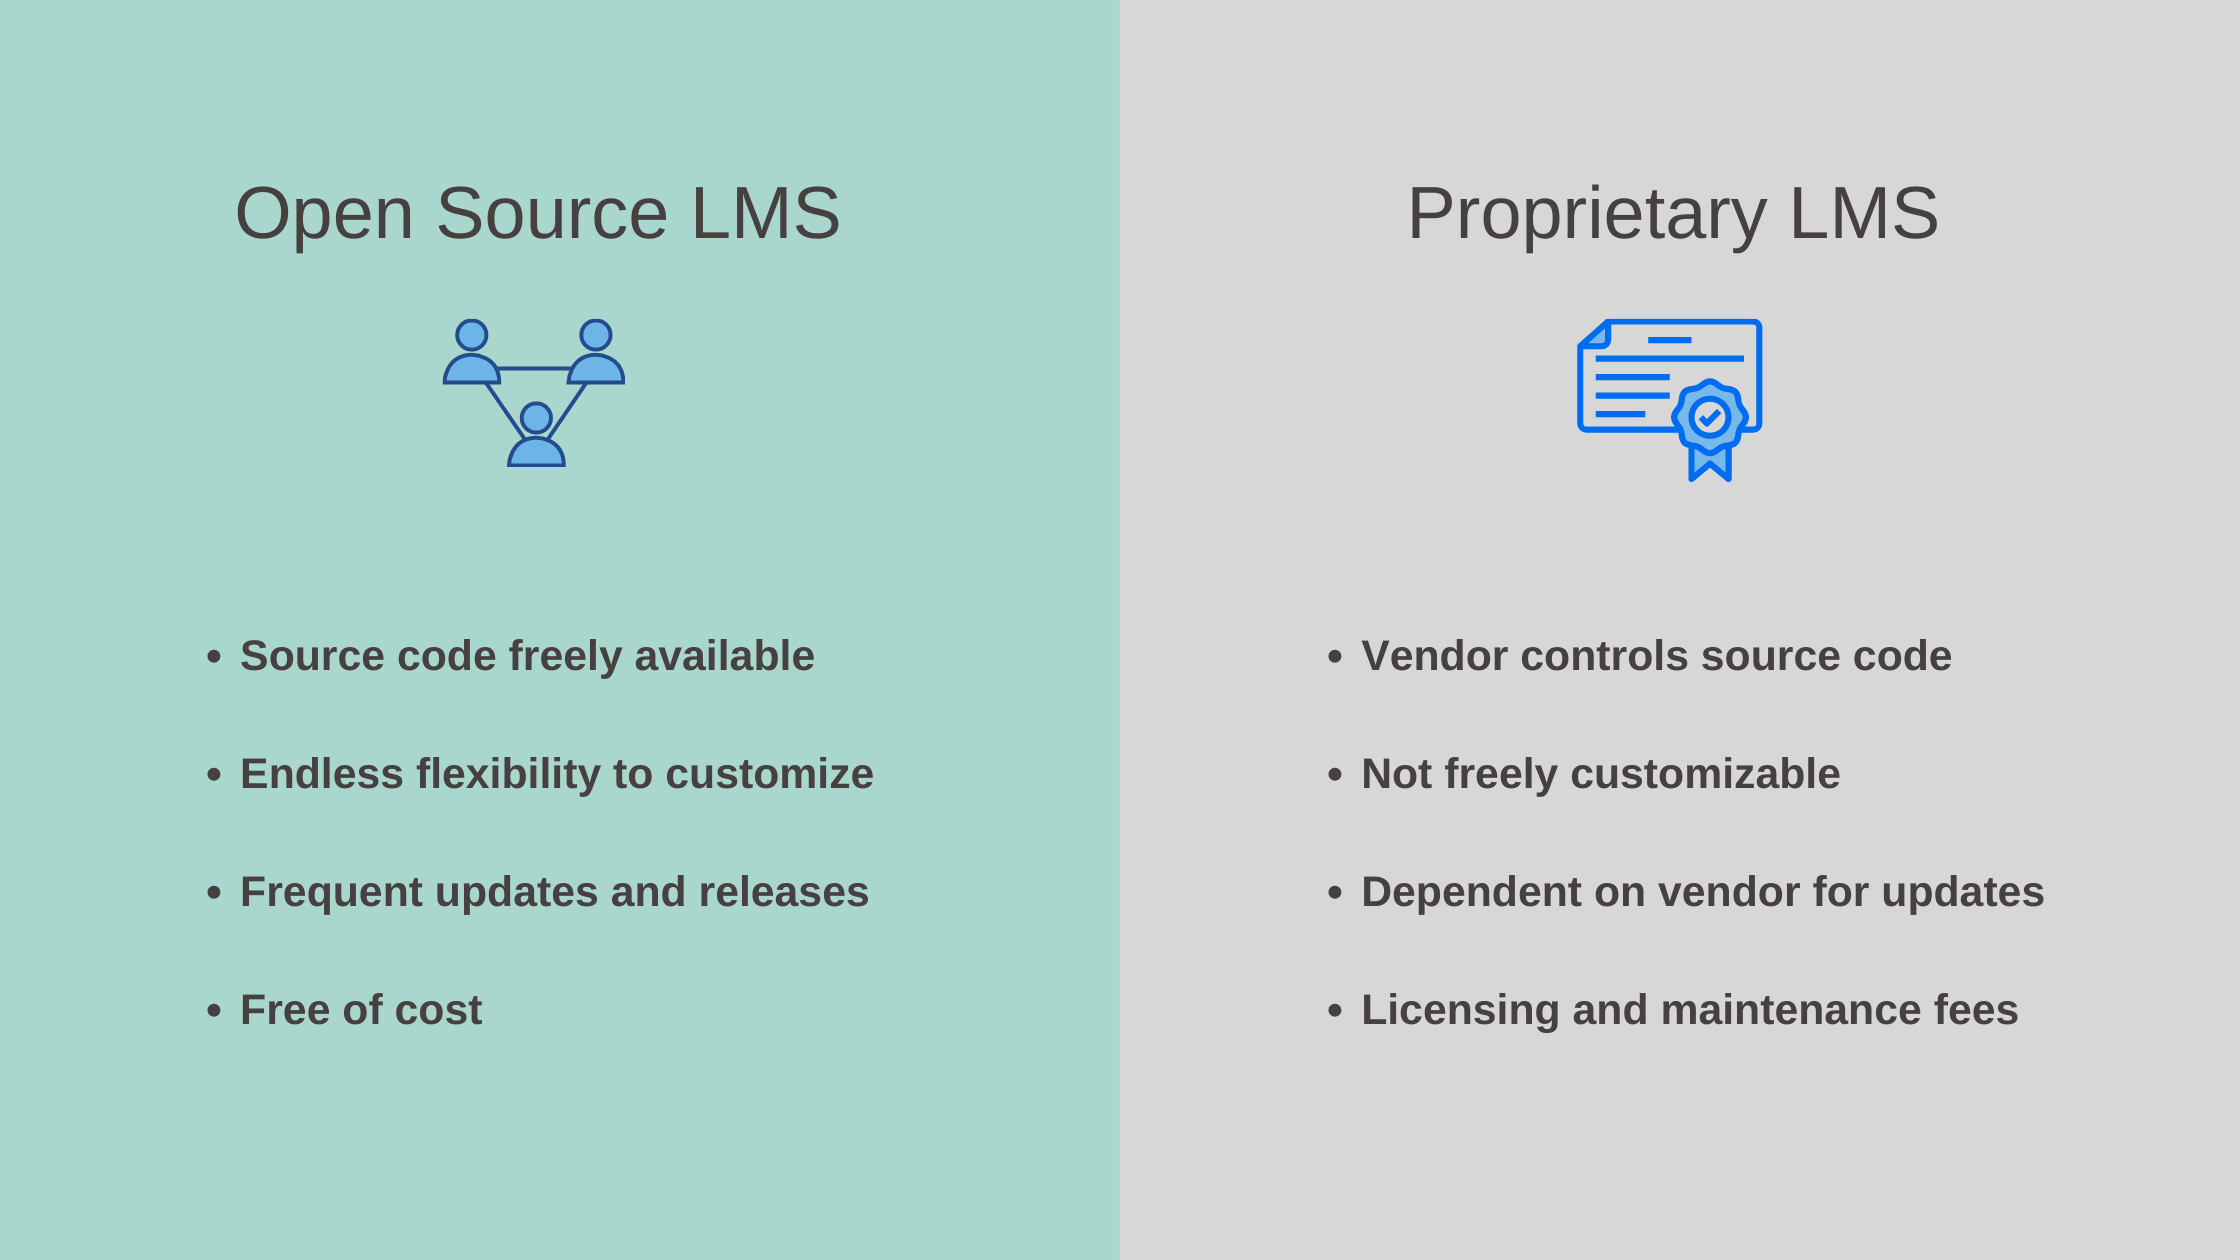 Open Source LMS vs Proprietary LMS